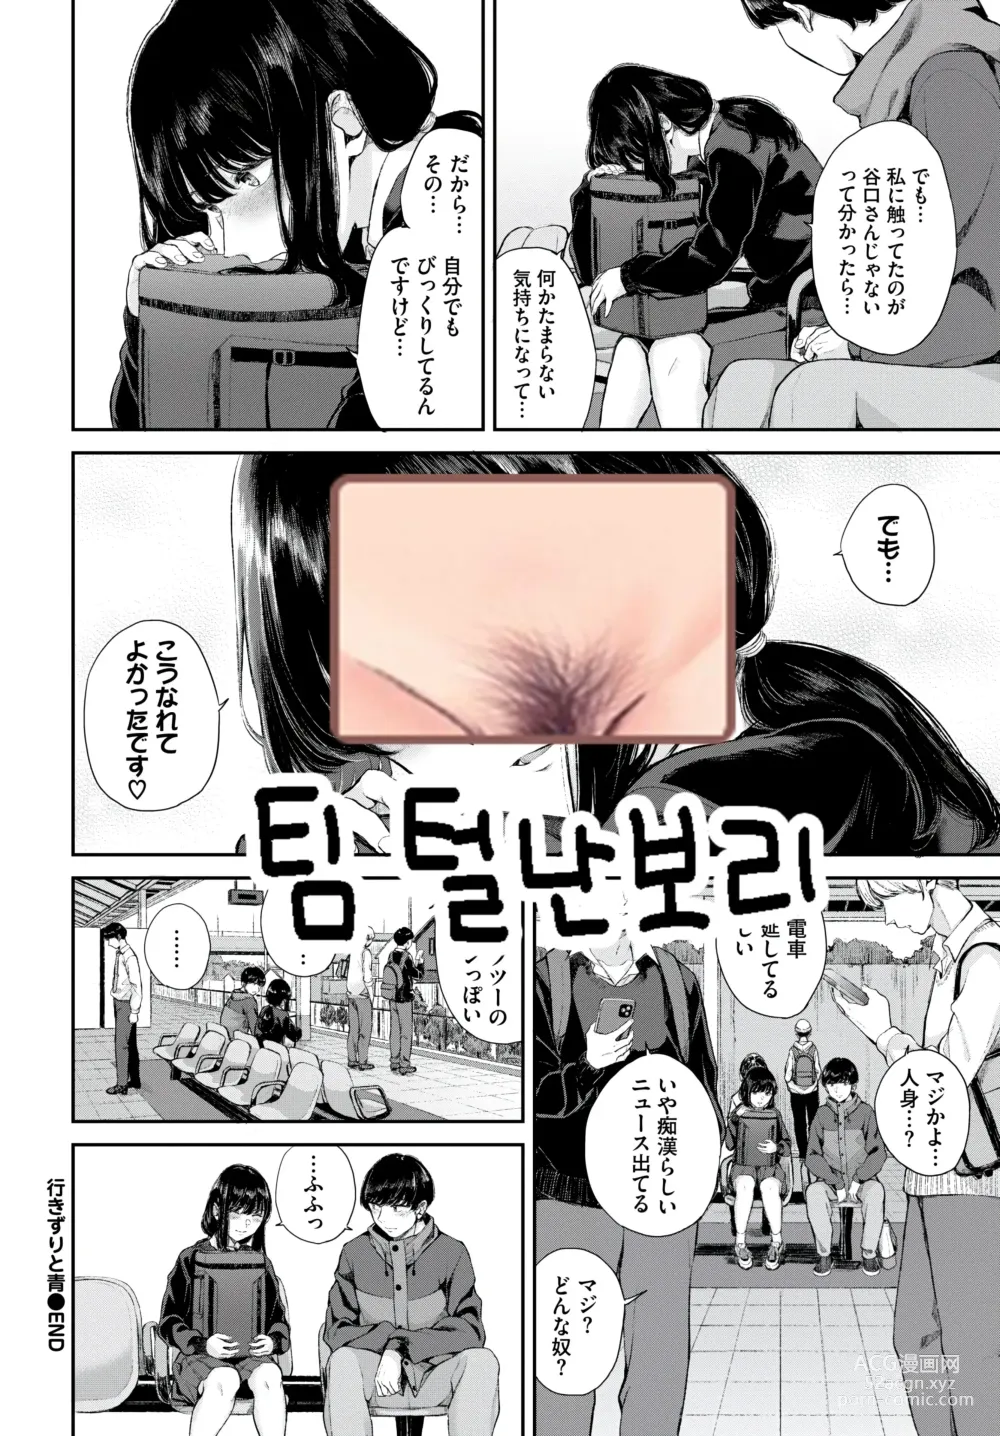 Page 25 of manga Yuki Zuri to Ao - passing by and blue.